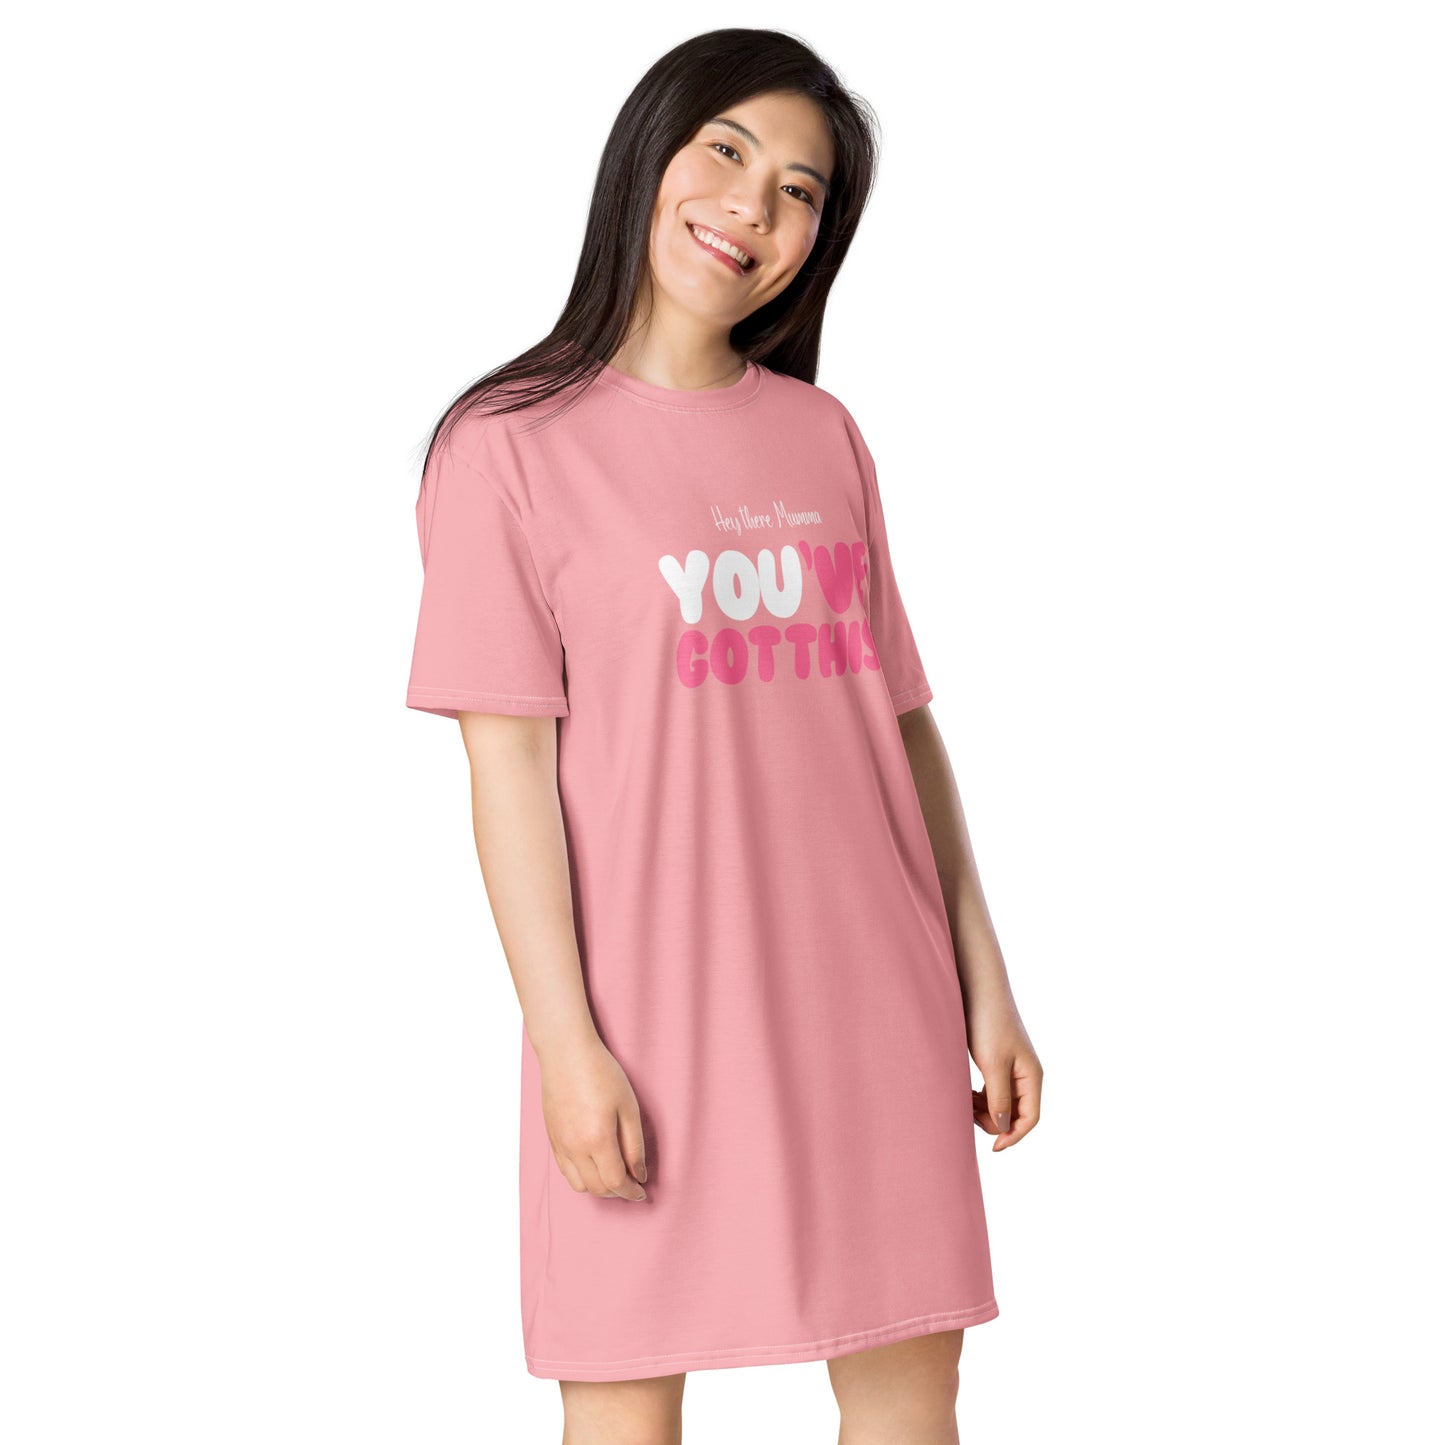 You've got this T-shirt dress